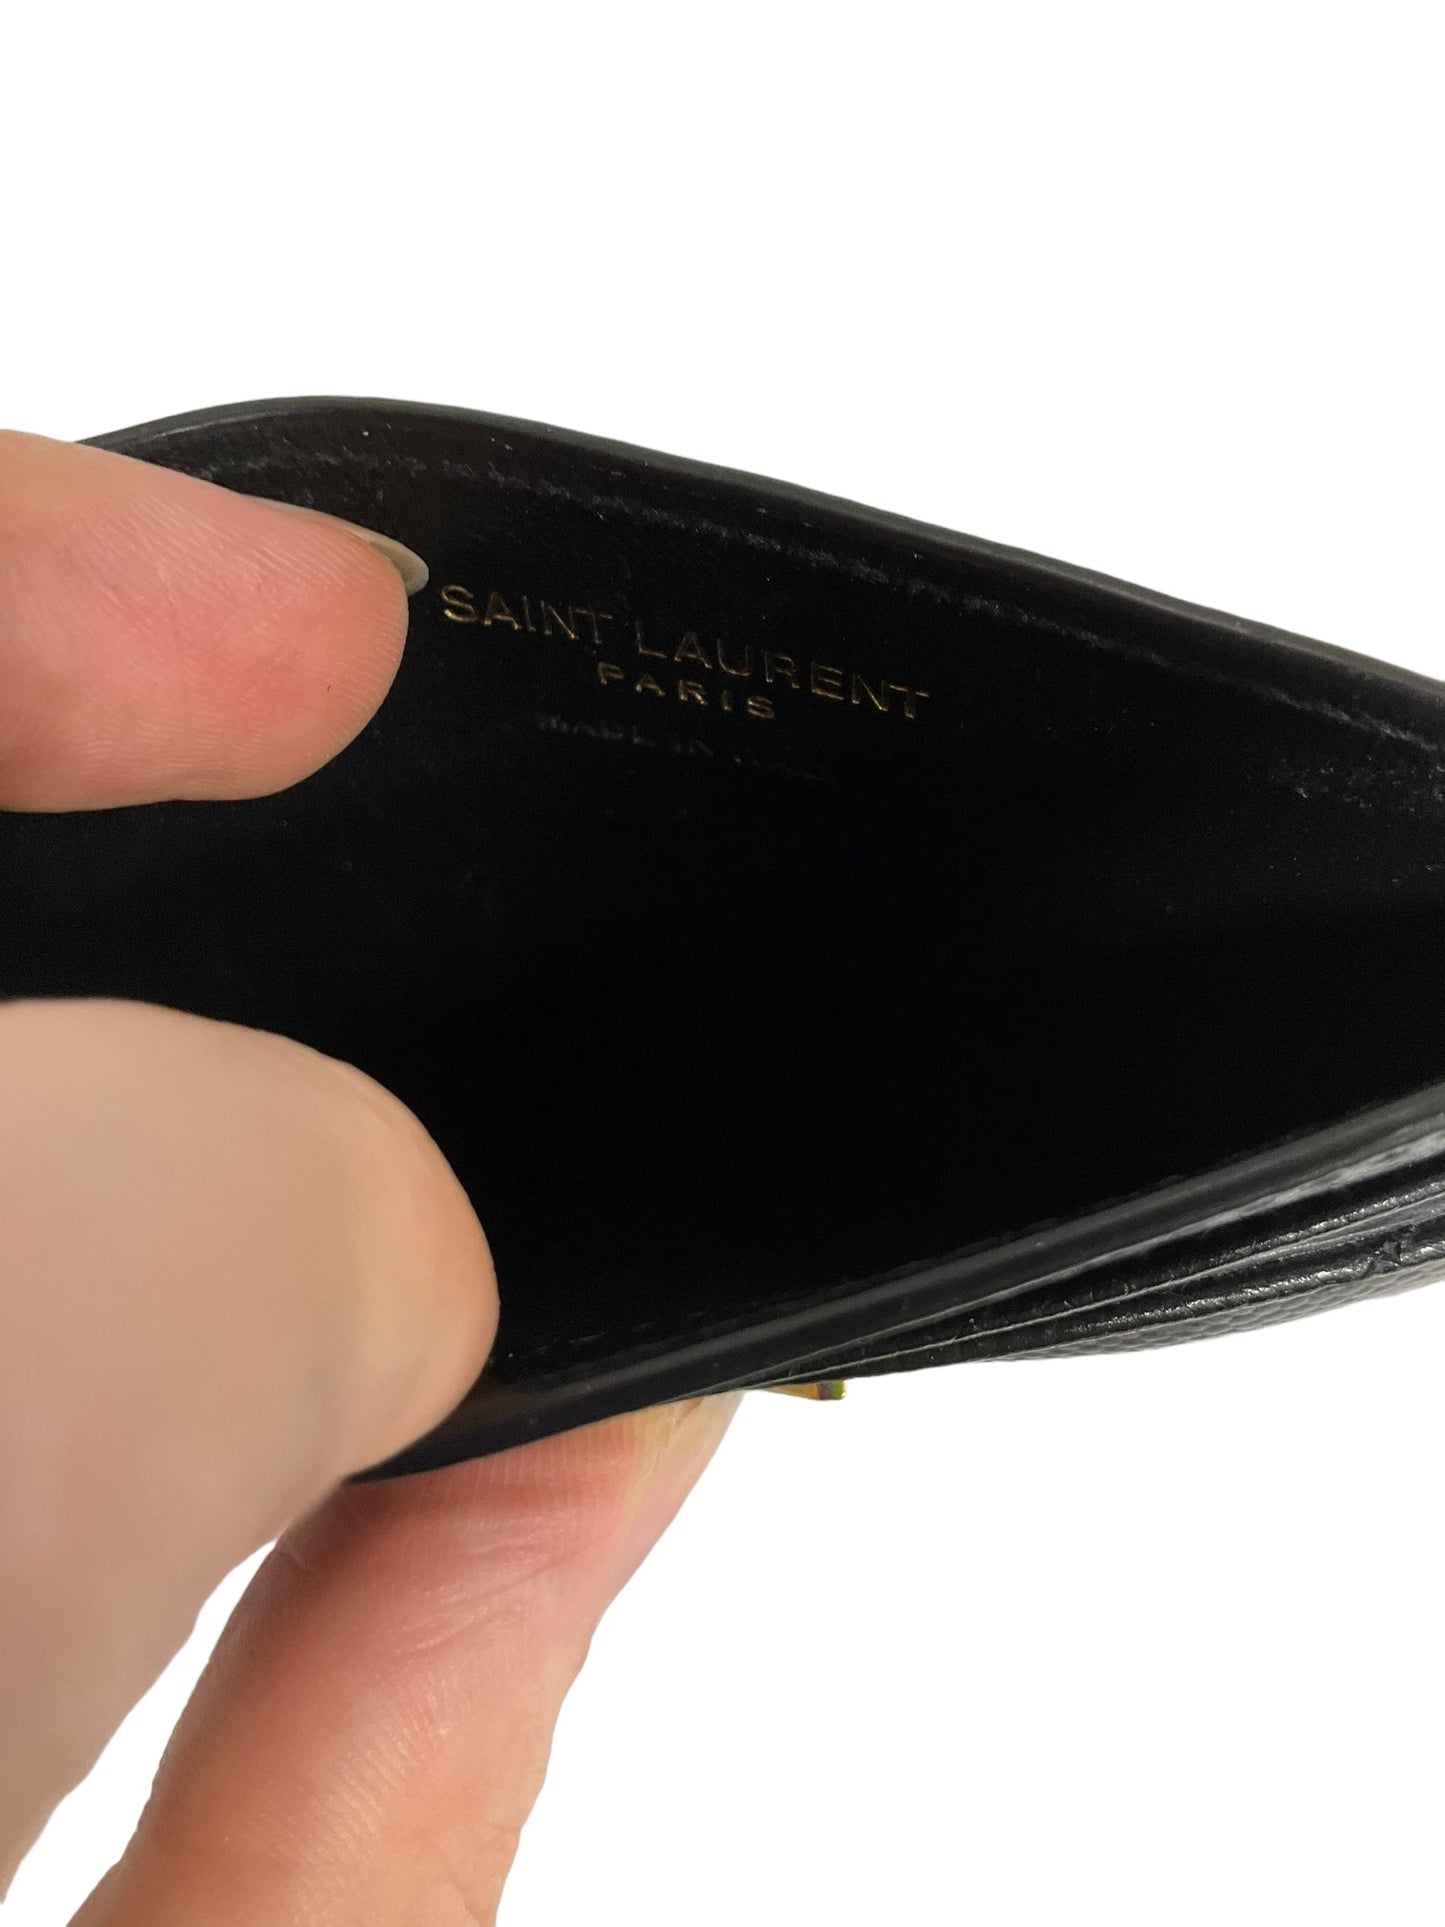 Wallet Luxury Designer Yves Saint Laurent, Size Small